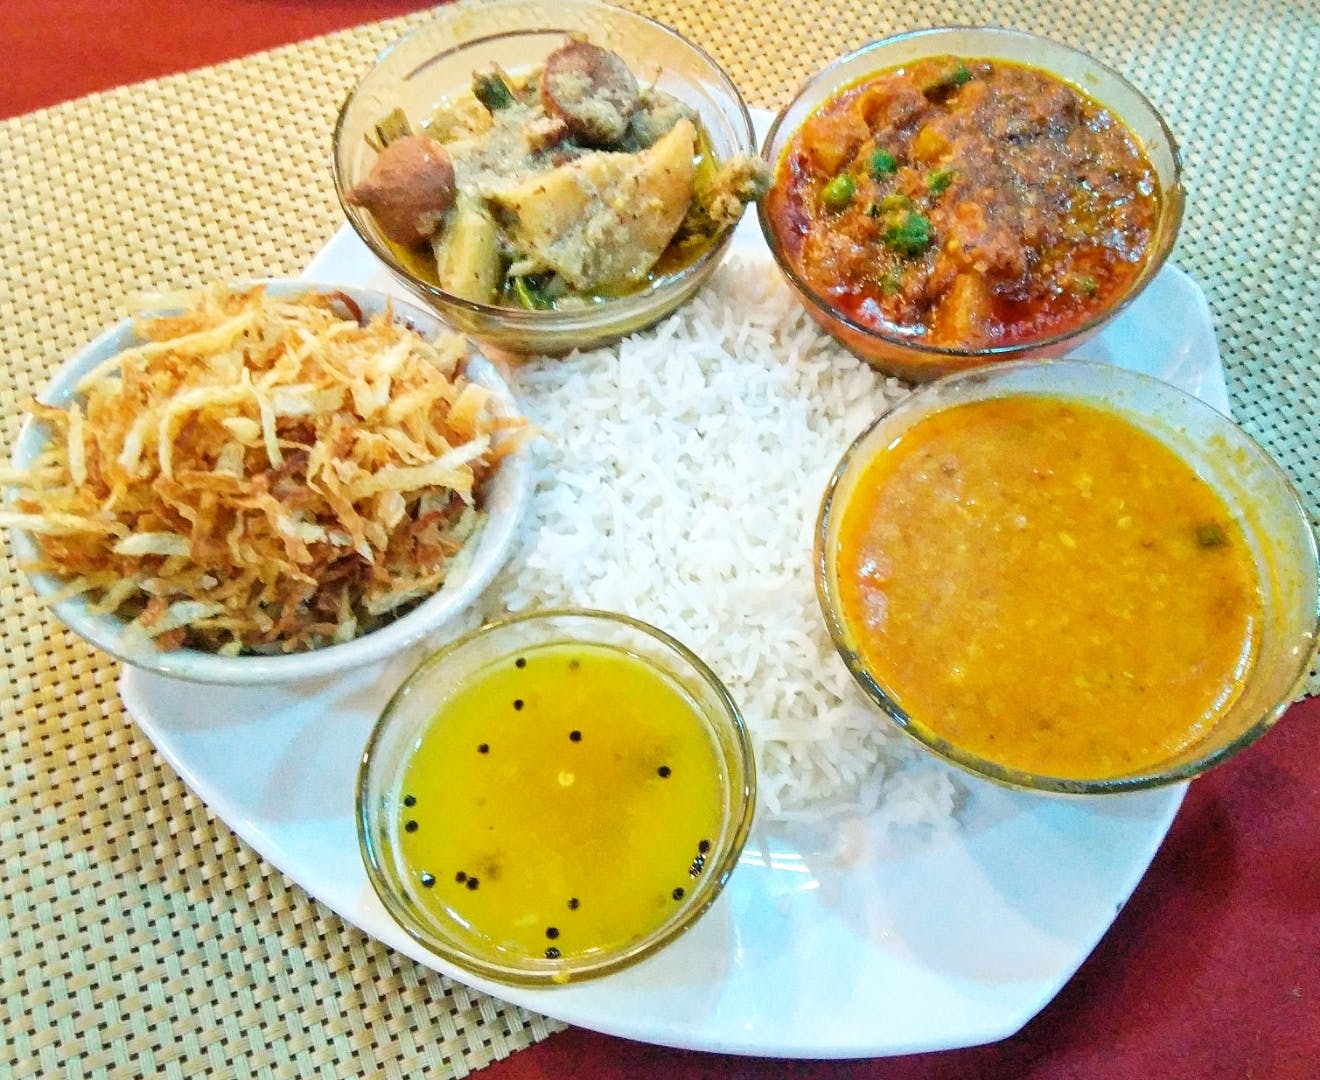 Dish,Food,Cuisine,Ingredient,Meal,Lunch,Produce,Indian cuisine,Recipe,Comfort food